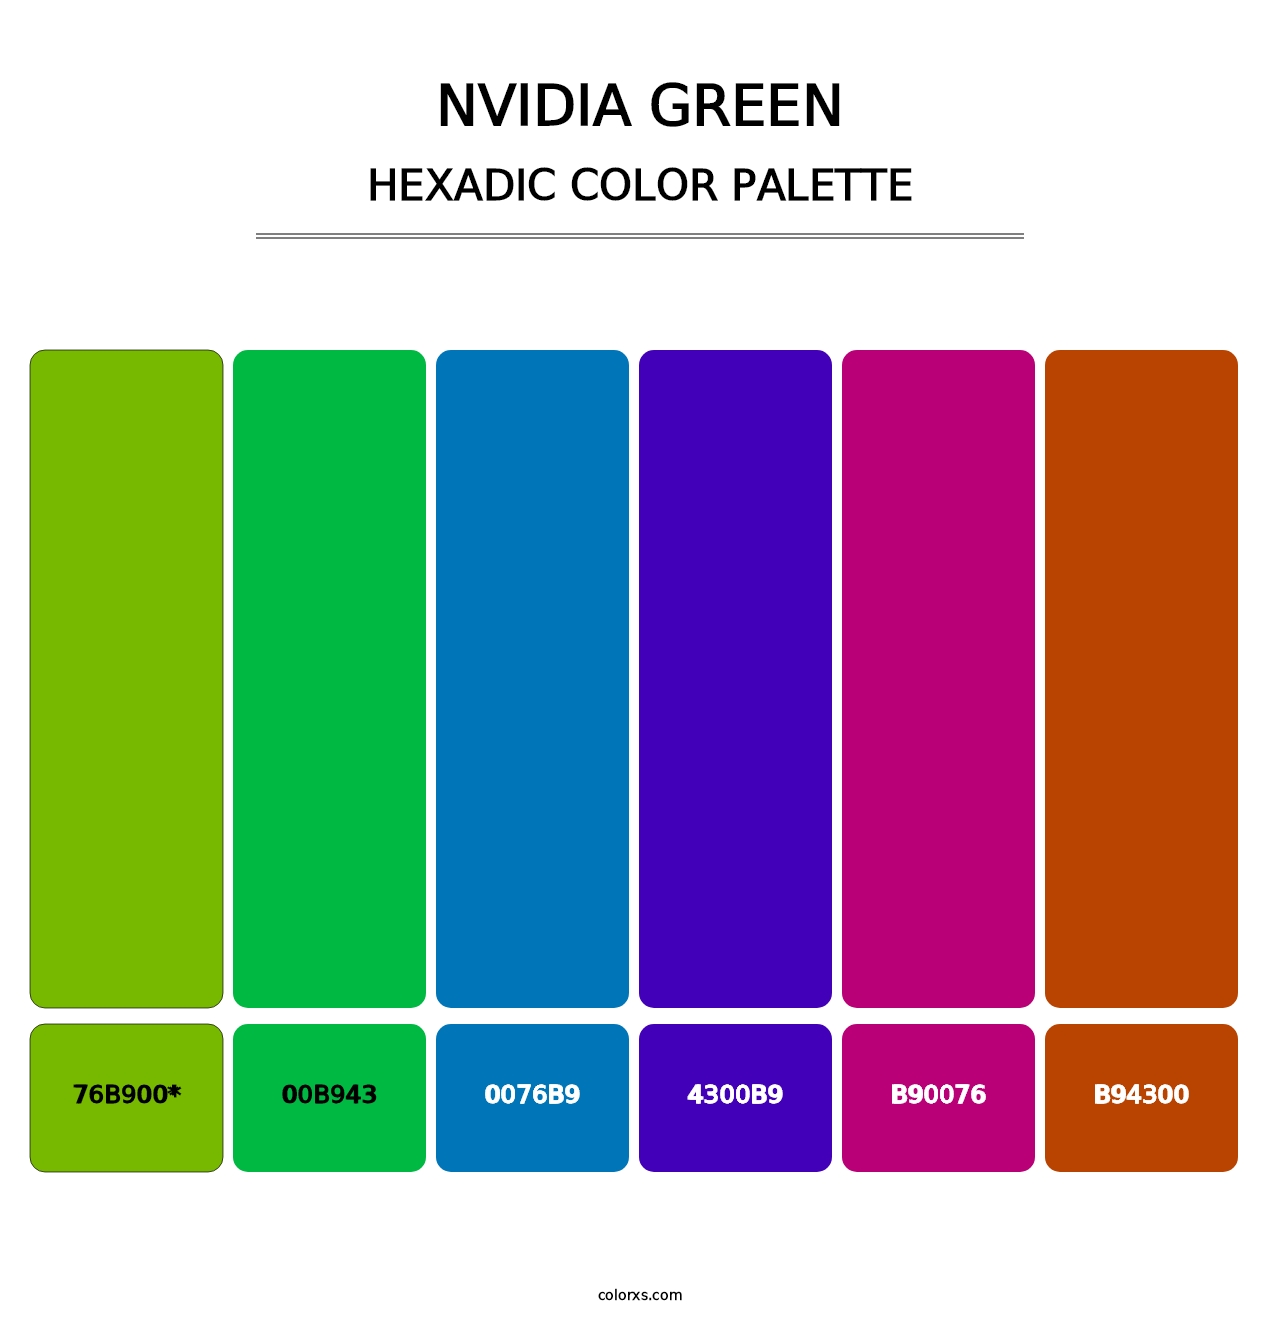 Nvidia Green - Hexadic Color Palette